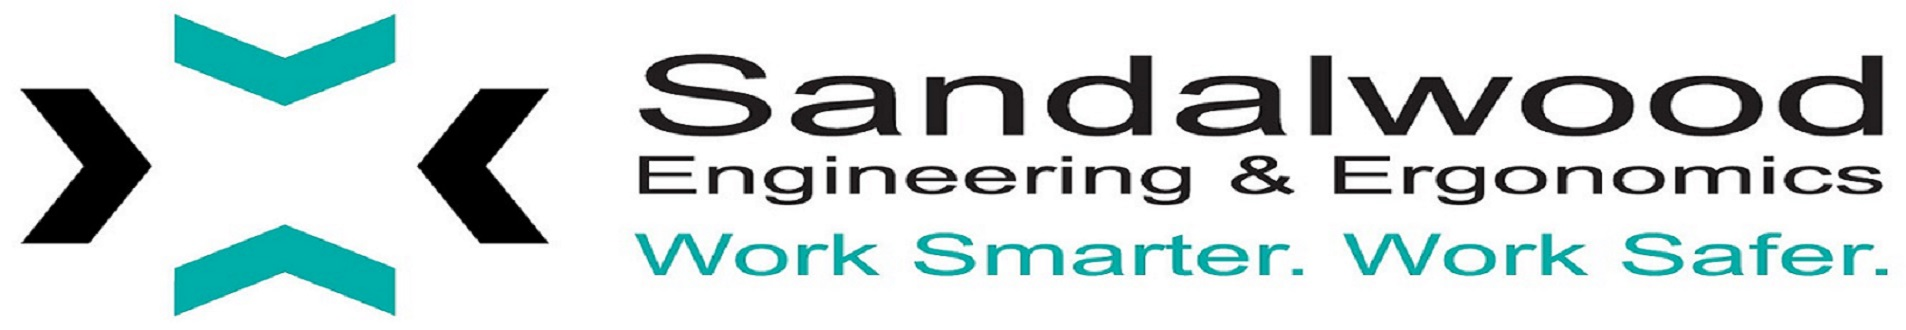 Sandalwood Engineering & Ergonomics logo